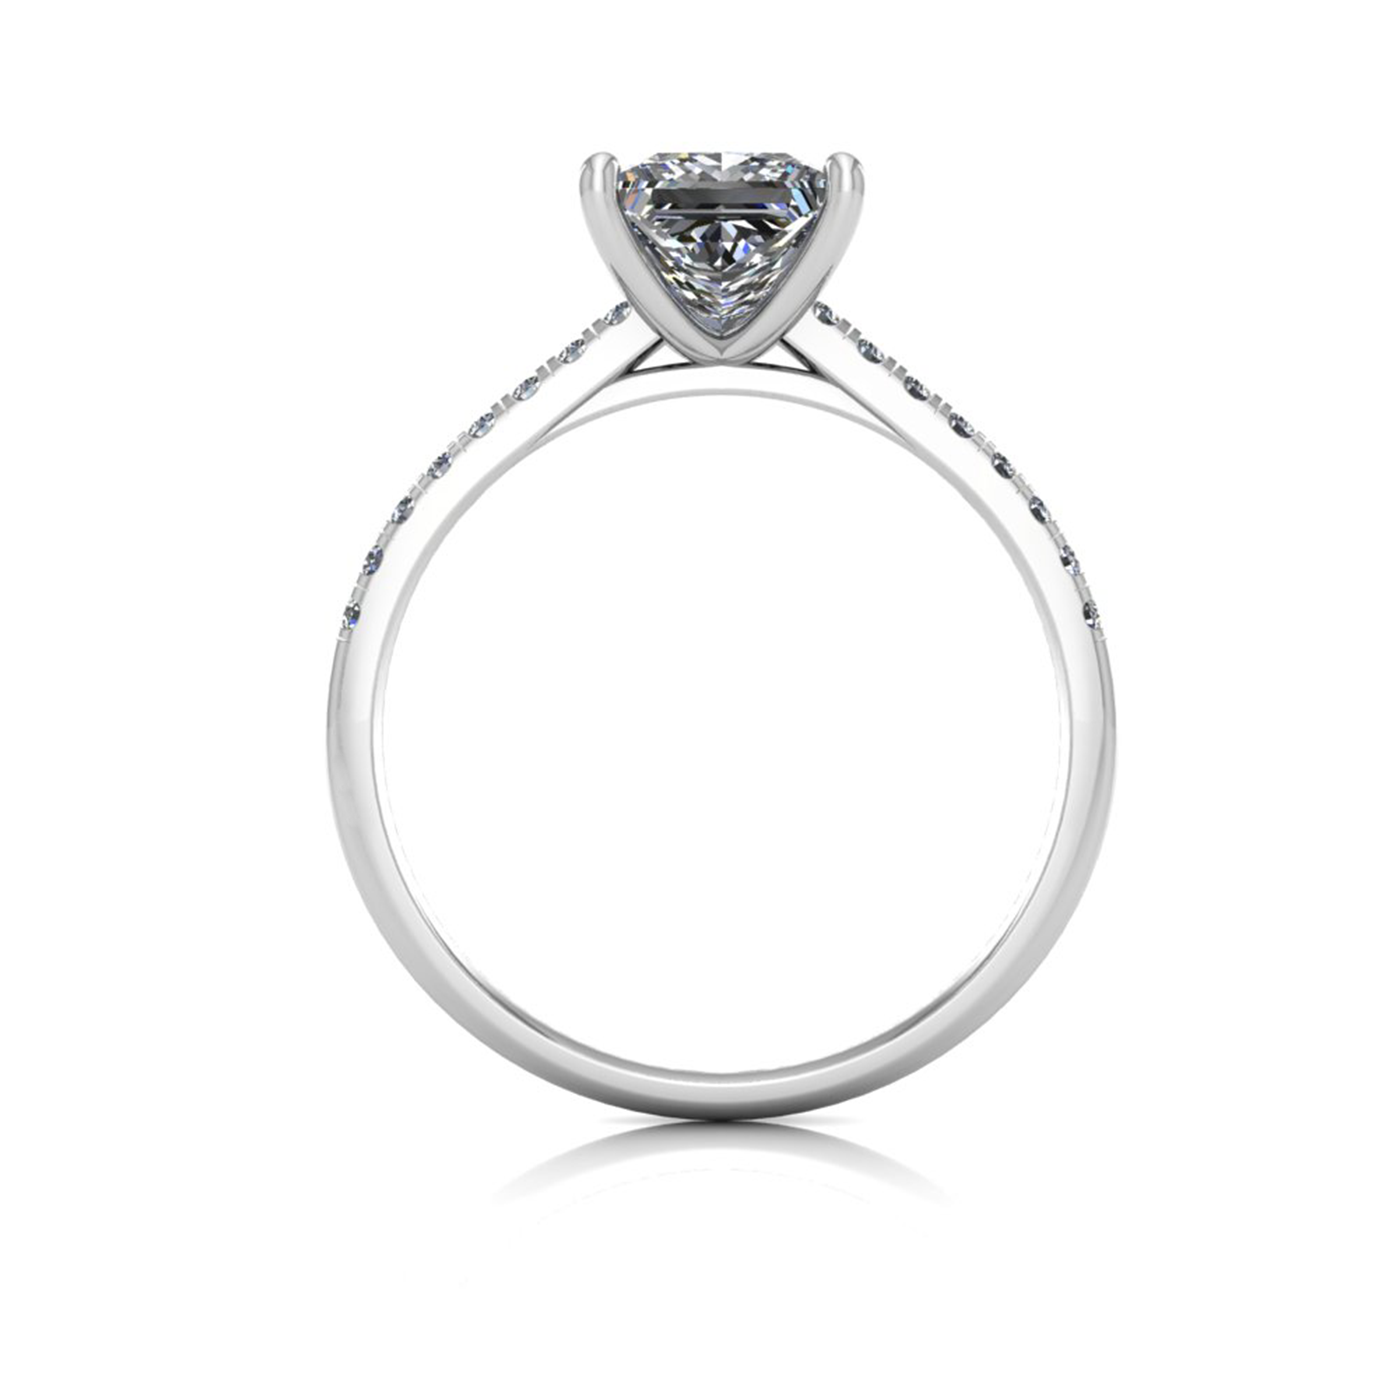 18k white gold 1,20 ct 4 prongs princess cut diamond engagement ring with whisper thin pavÉ set band